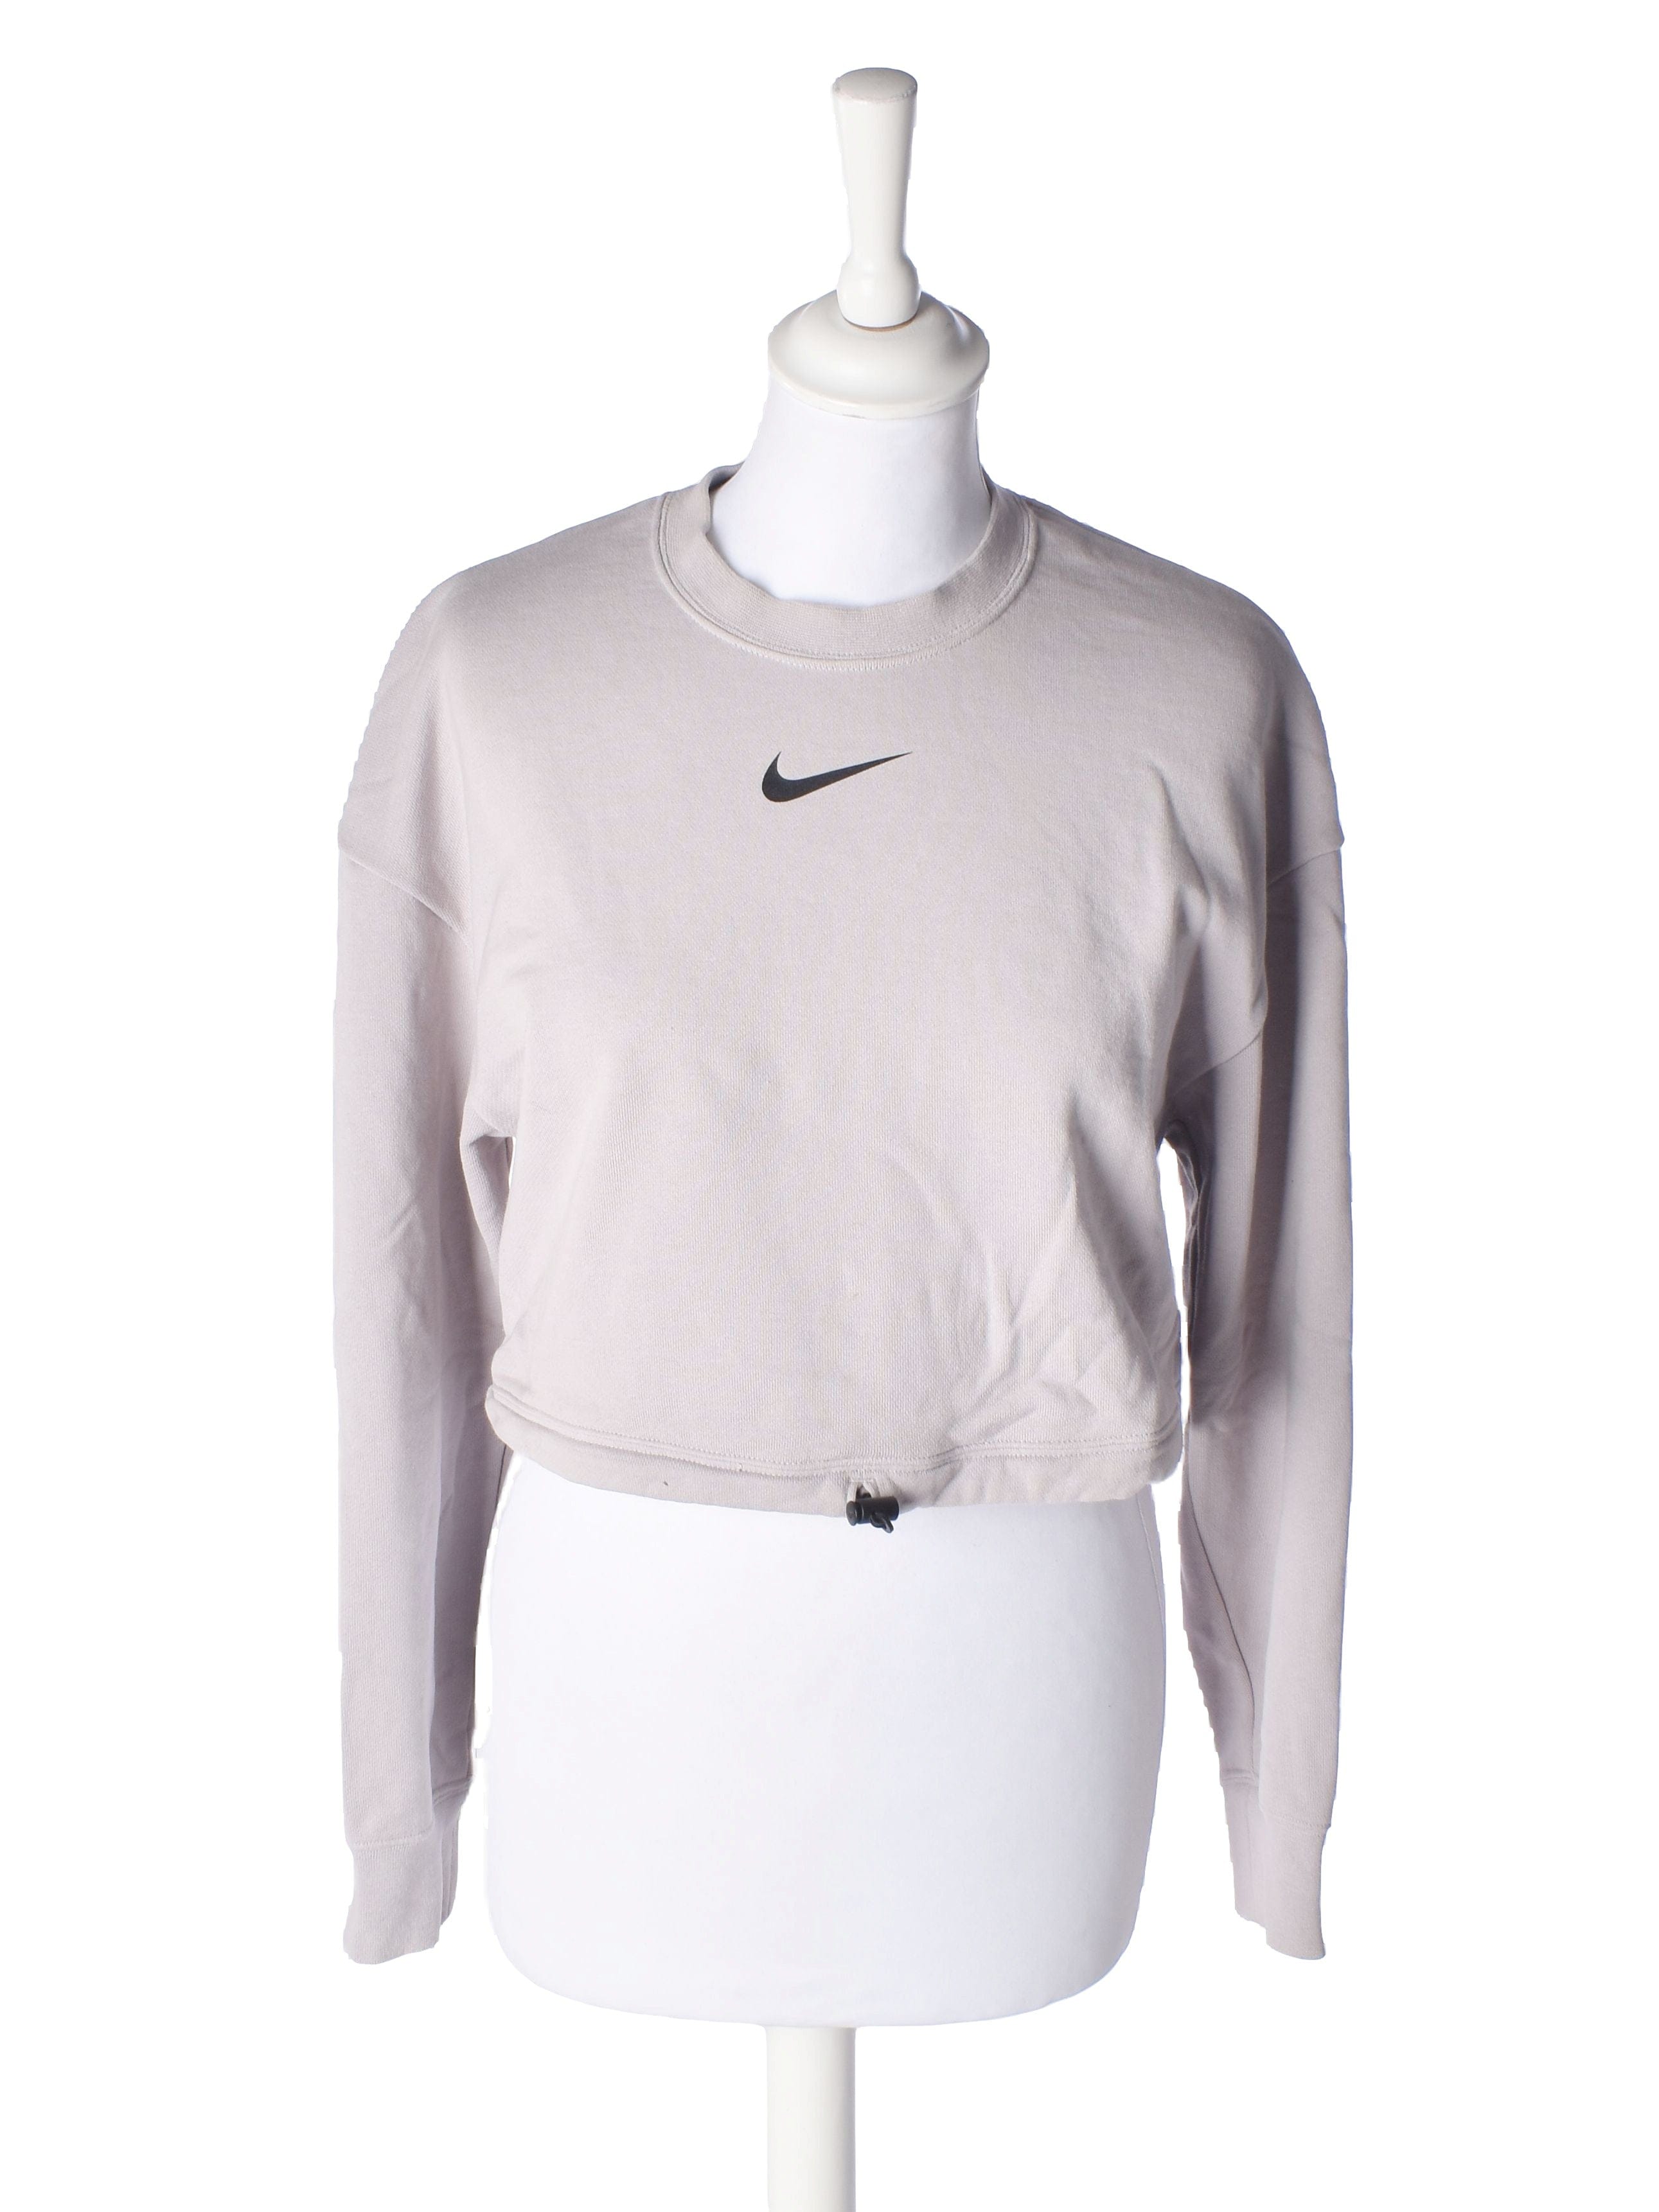 Secondhand - Nike - - Sweatshirt - XS / Grå